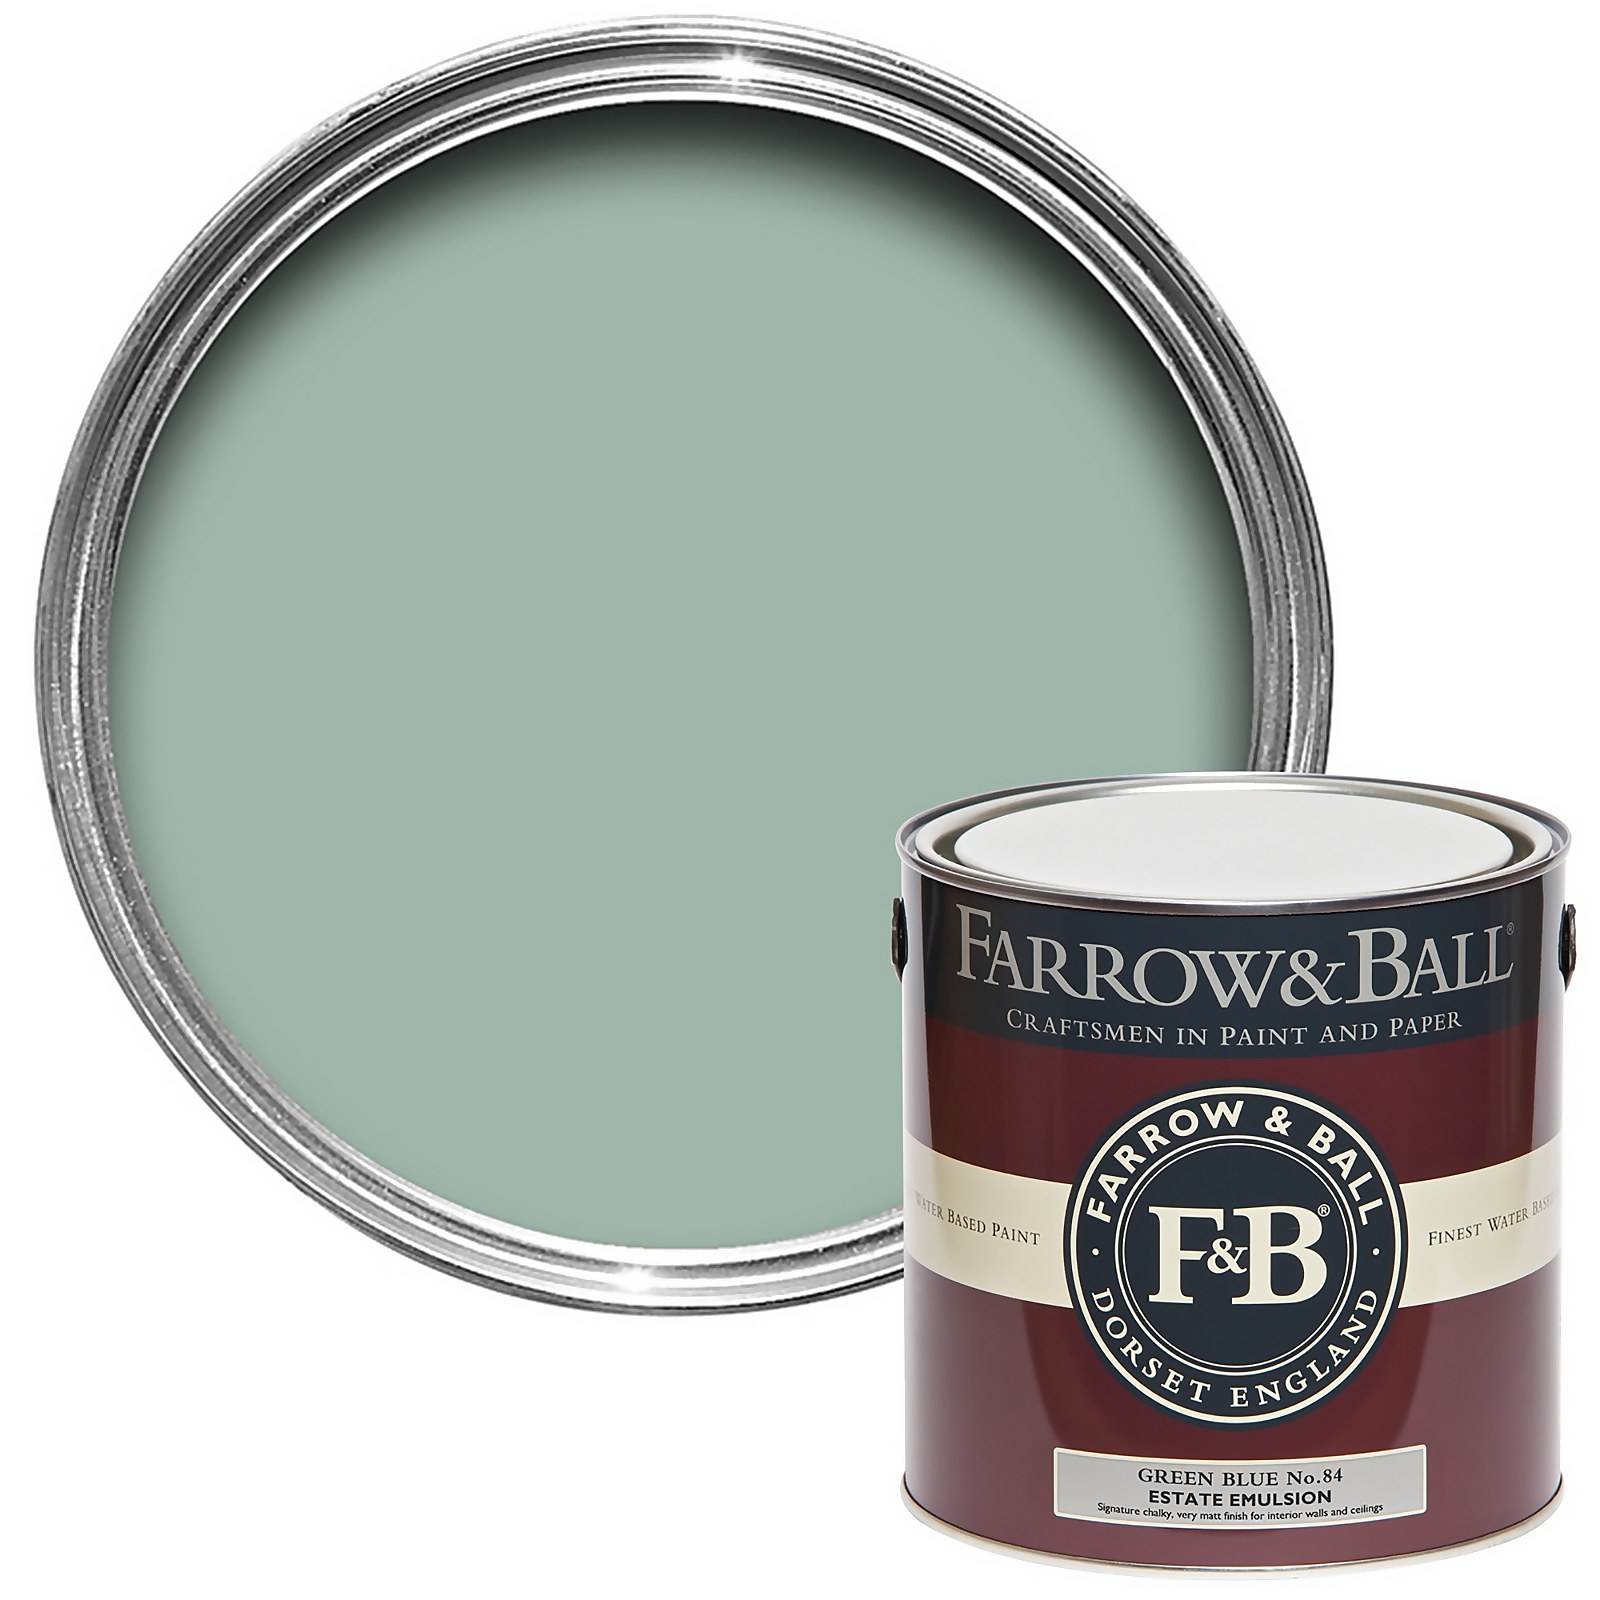 Farrow & Ball Estate Matt Emulsion Paint Green Blue No.84 - 2.5L